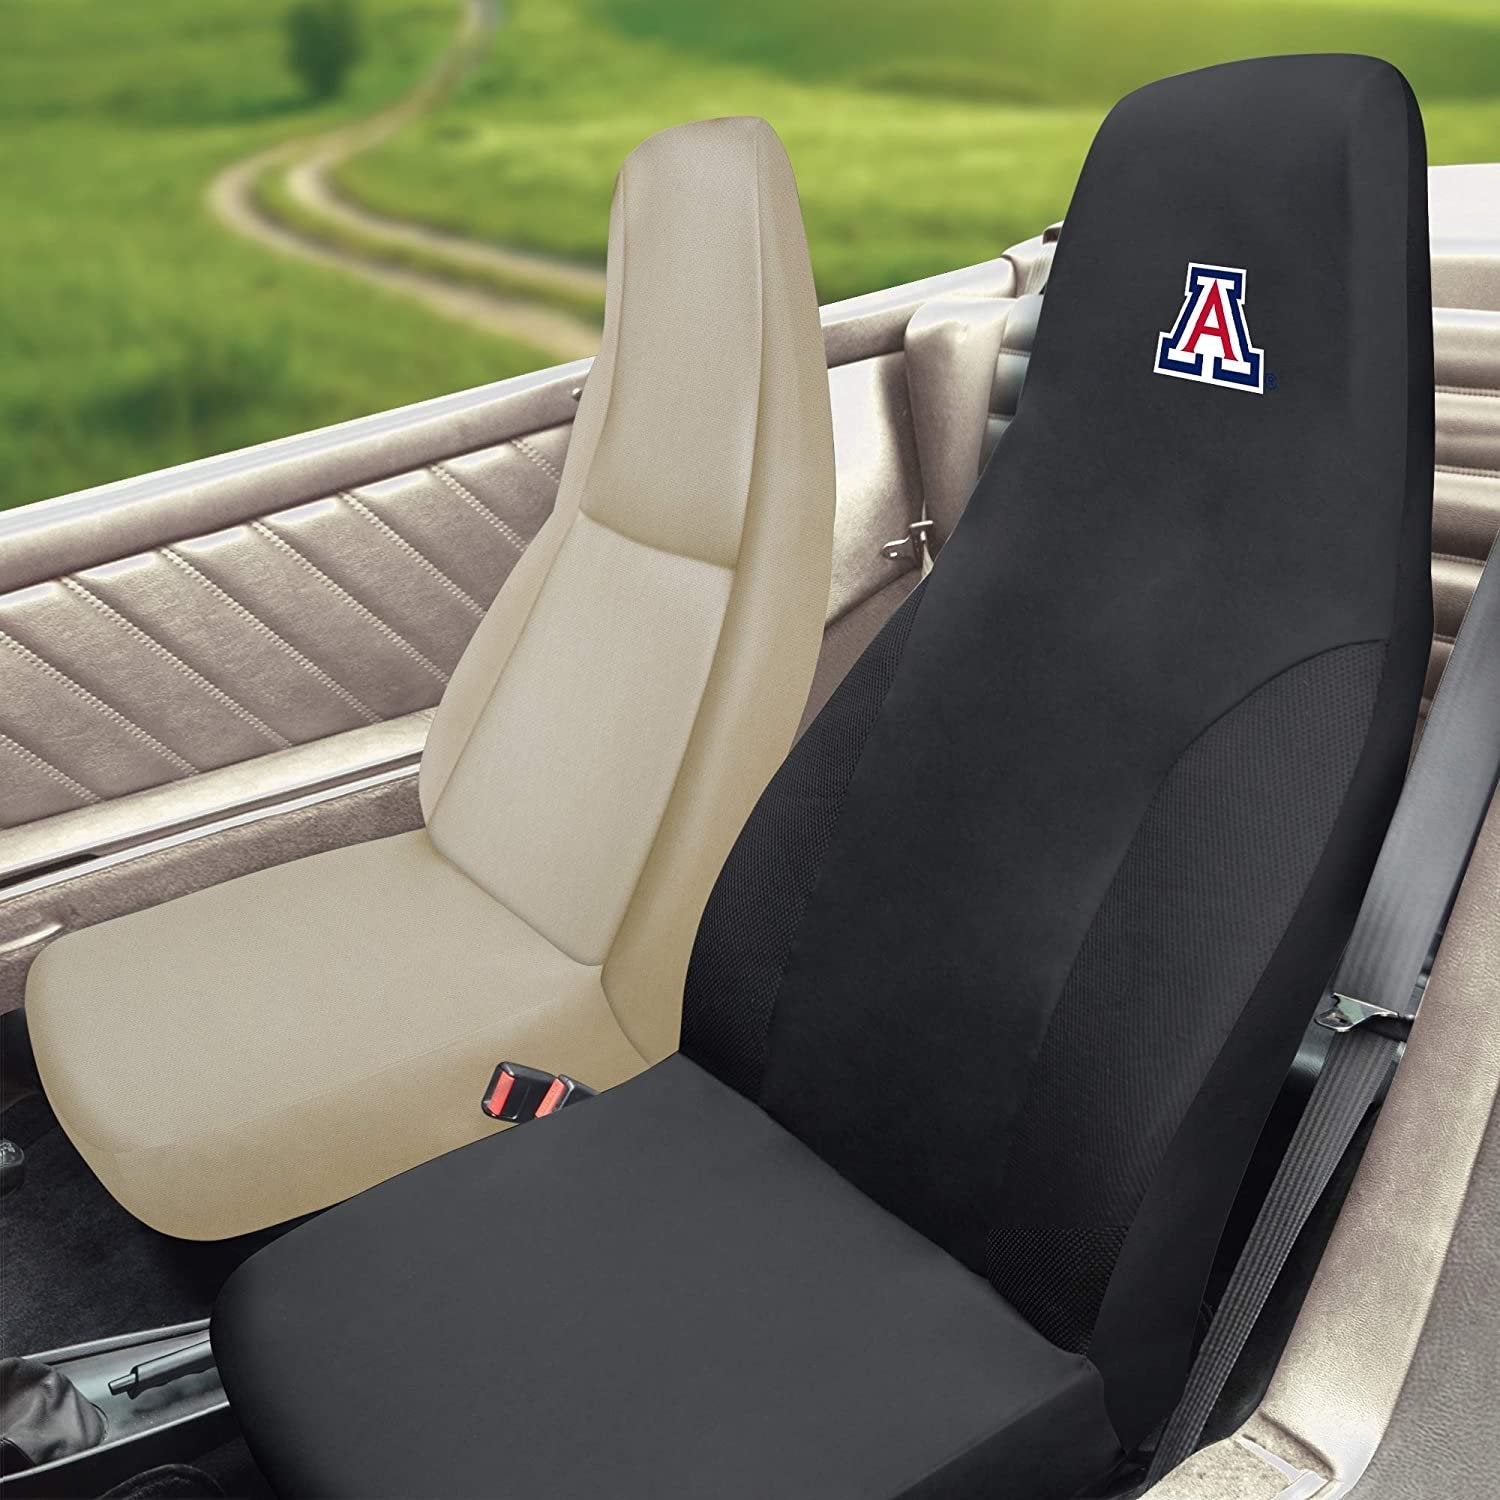 Arizona Wildcats Bucket Auto Seat Cover 48x20 Inch Elastic